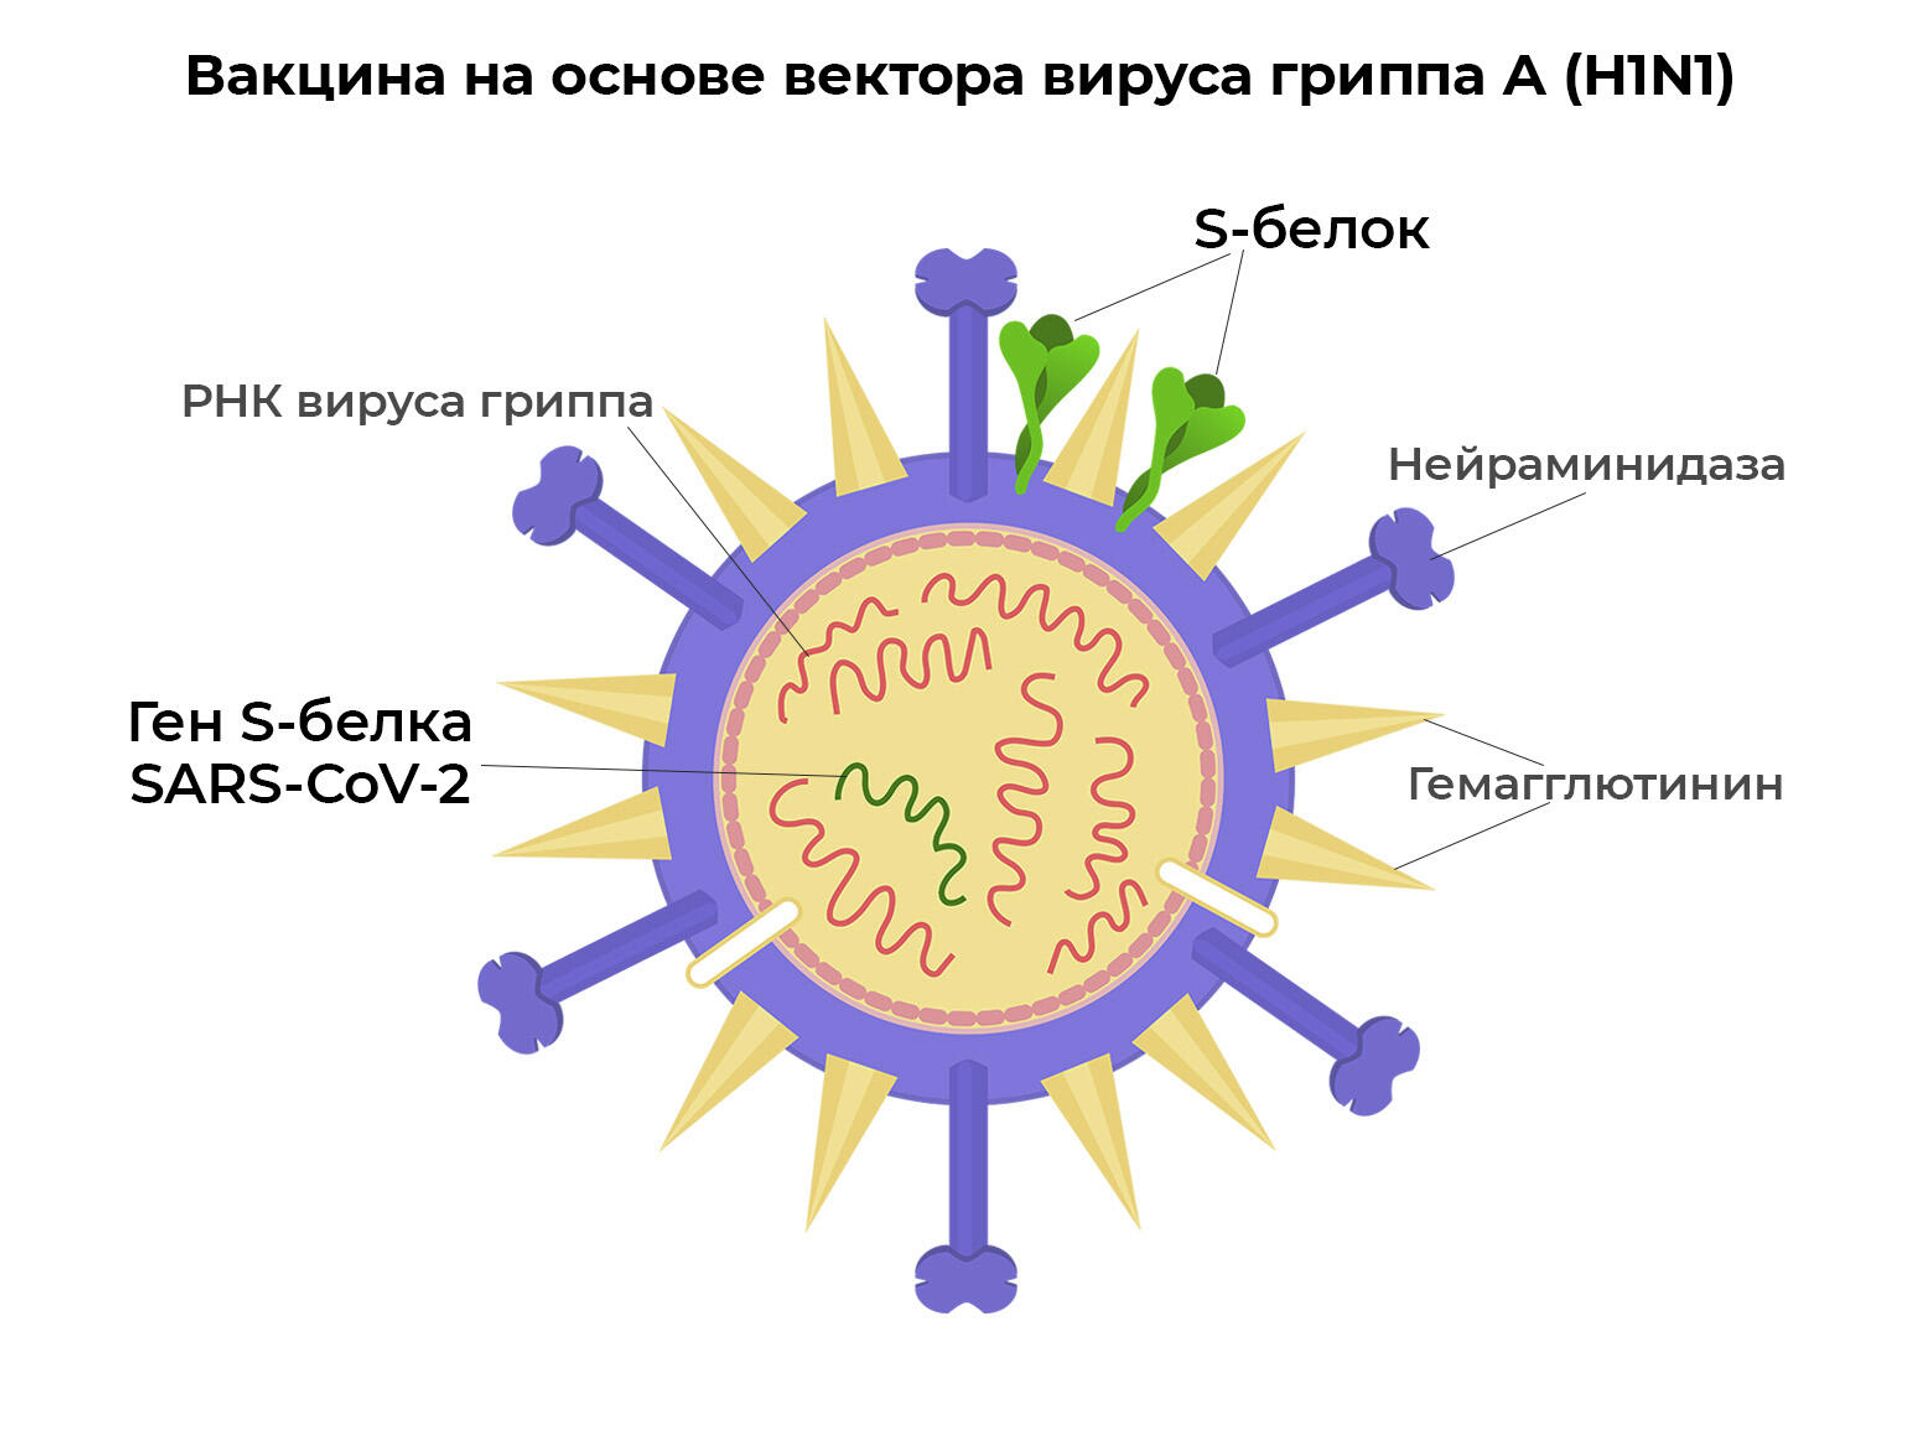 Удар по коронавирусу. Названо средство, которое остановит пандемию COVID-19